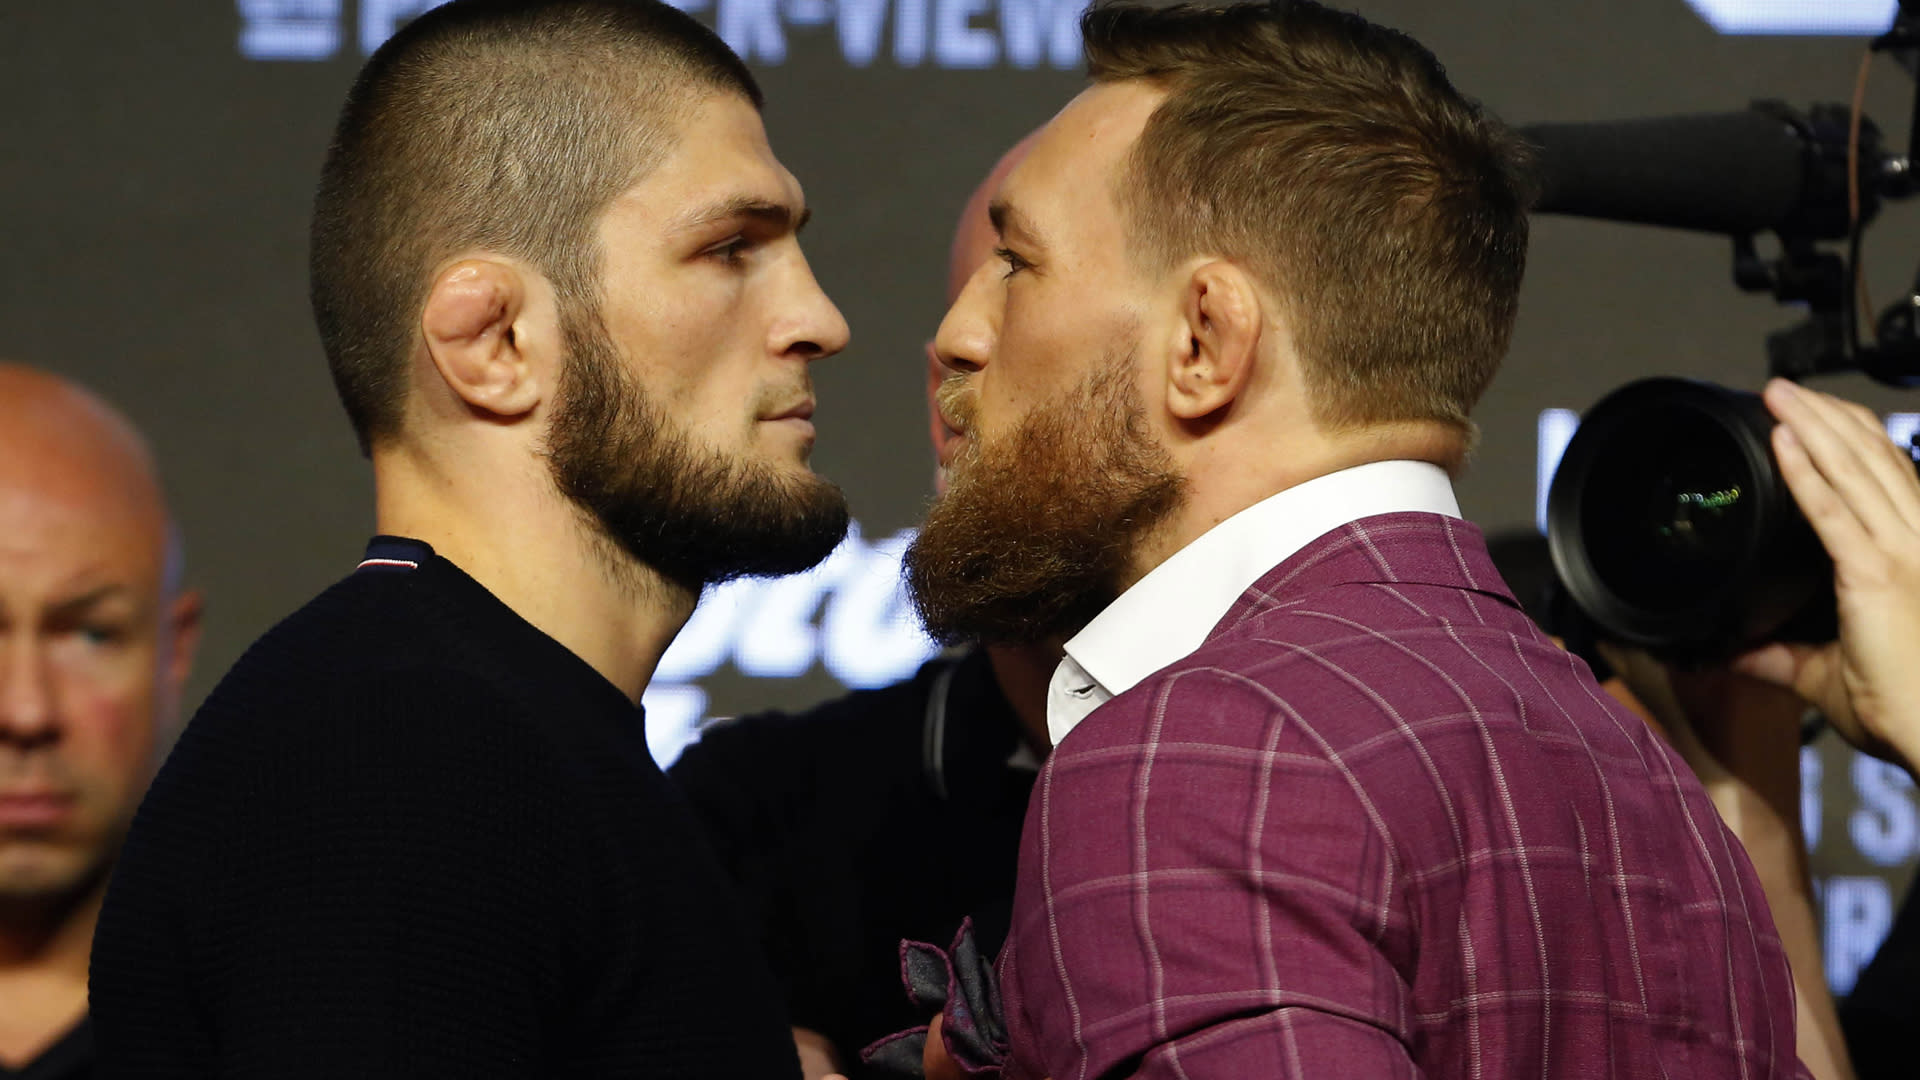 Conor McGregor vs. Khabib Nurmagomedov live stream: Watch UFC 229 online